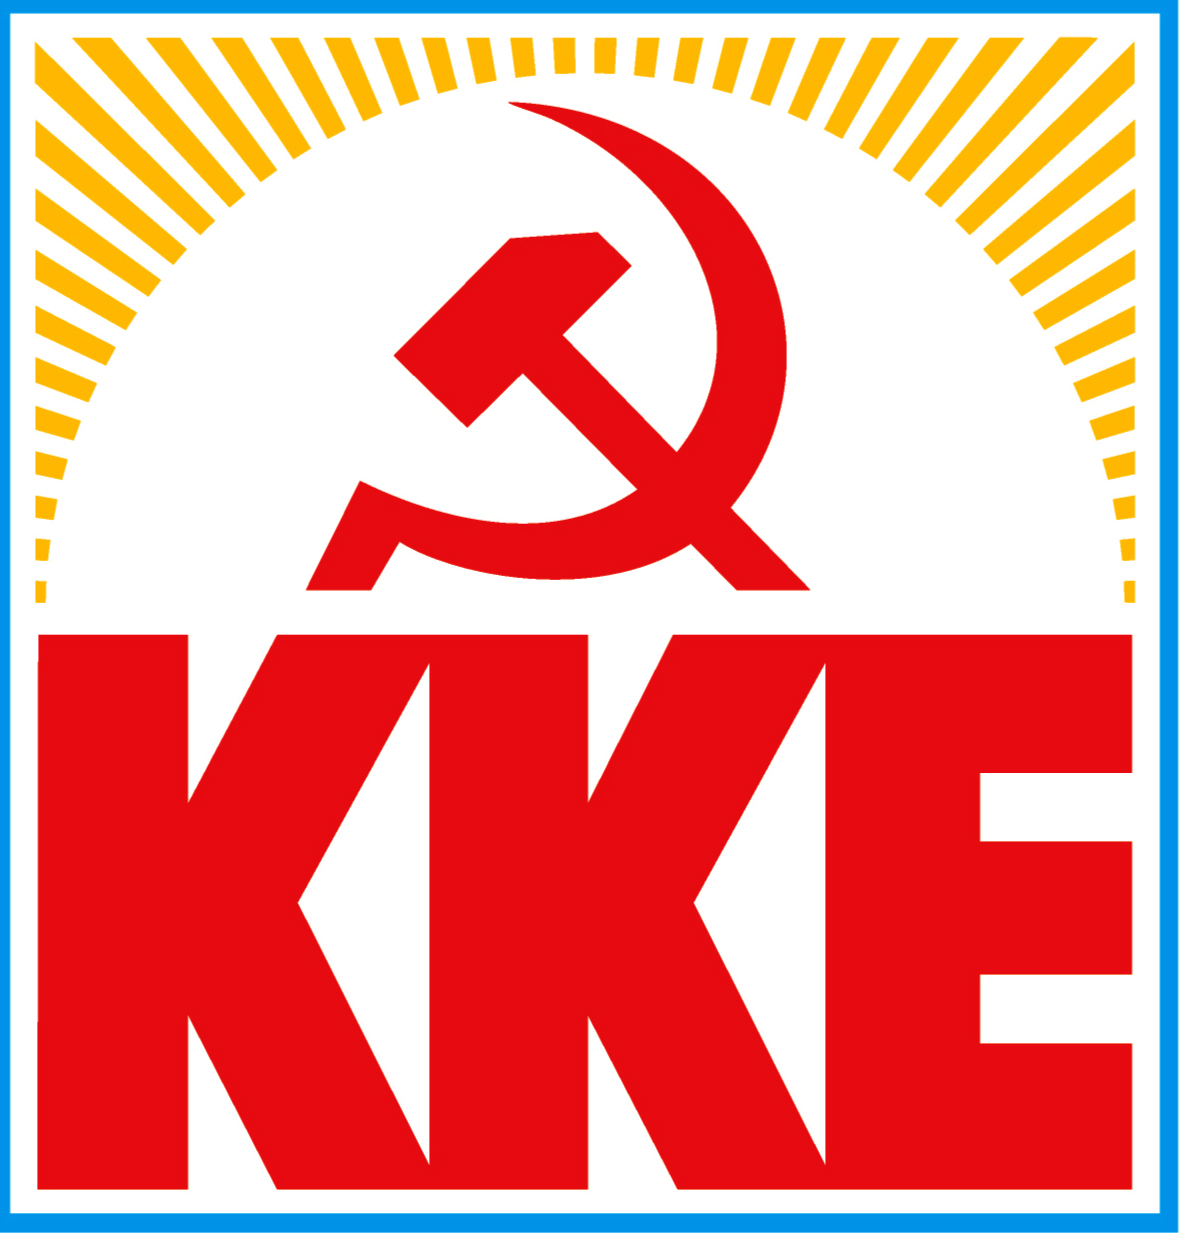 KKE: Αναθεώρηση του άρθρου 16 με το οποίο η Παιδεία πρέπει να προάγει τη θρησκευτική συνείδηση